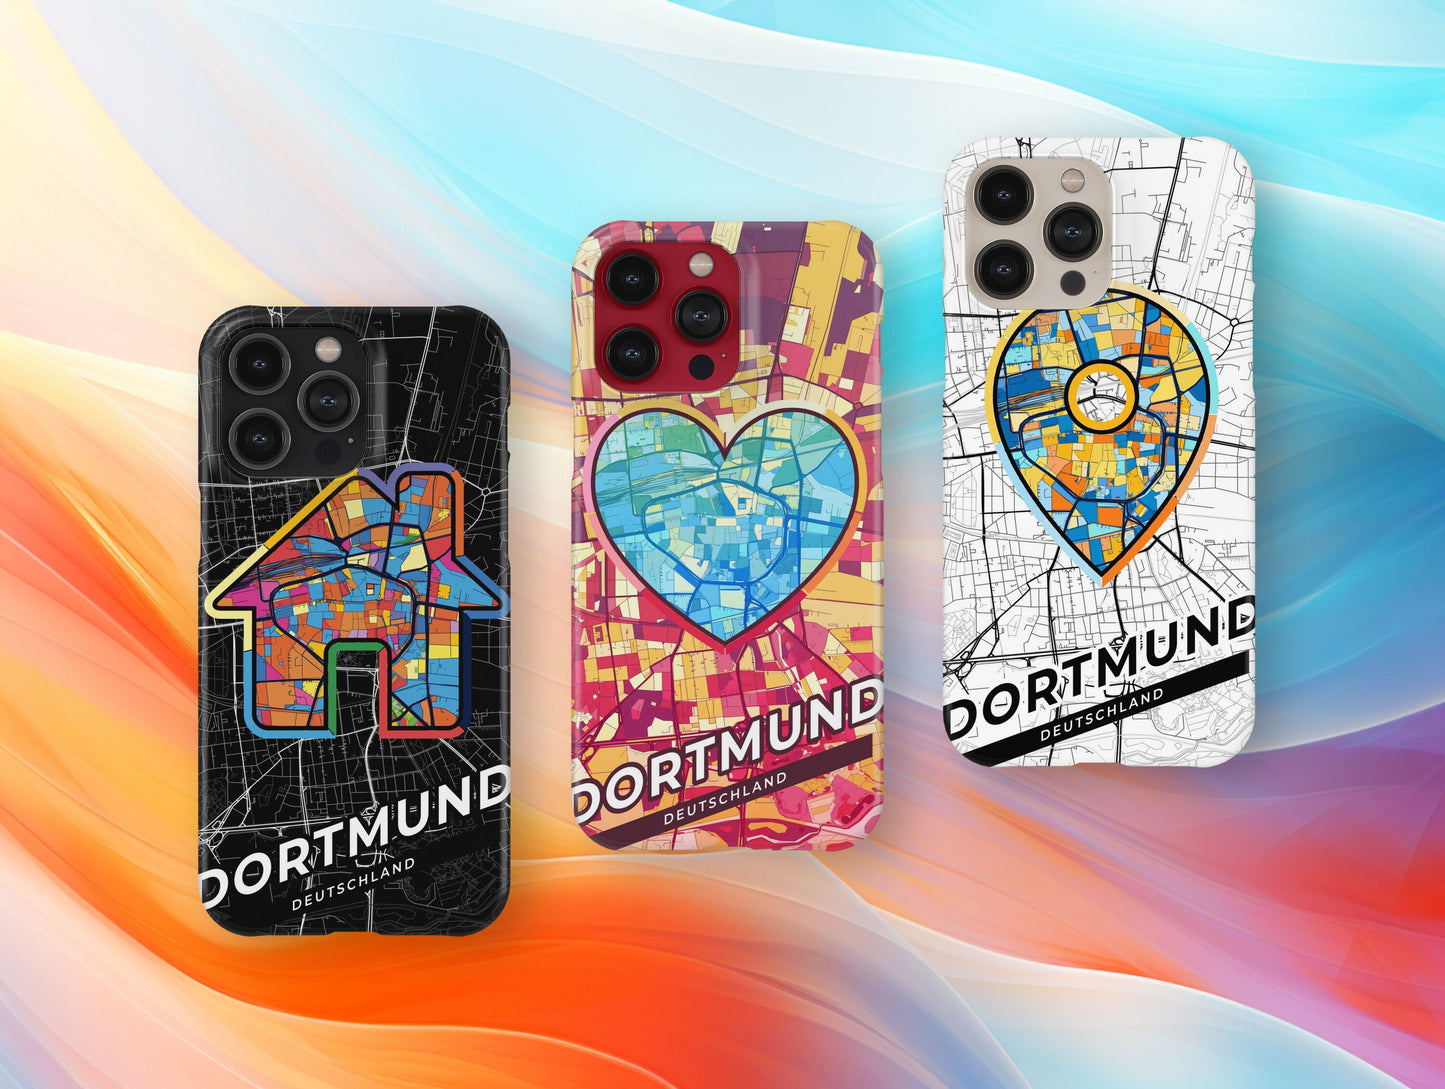 Dortmund Deutschland slim phone case with colorful icon. Birthday, wedding or housewarming gift. Couple match cases.